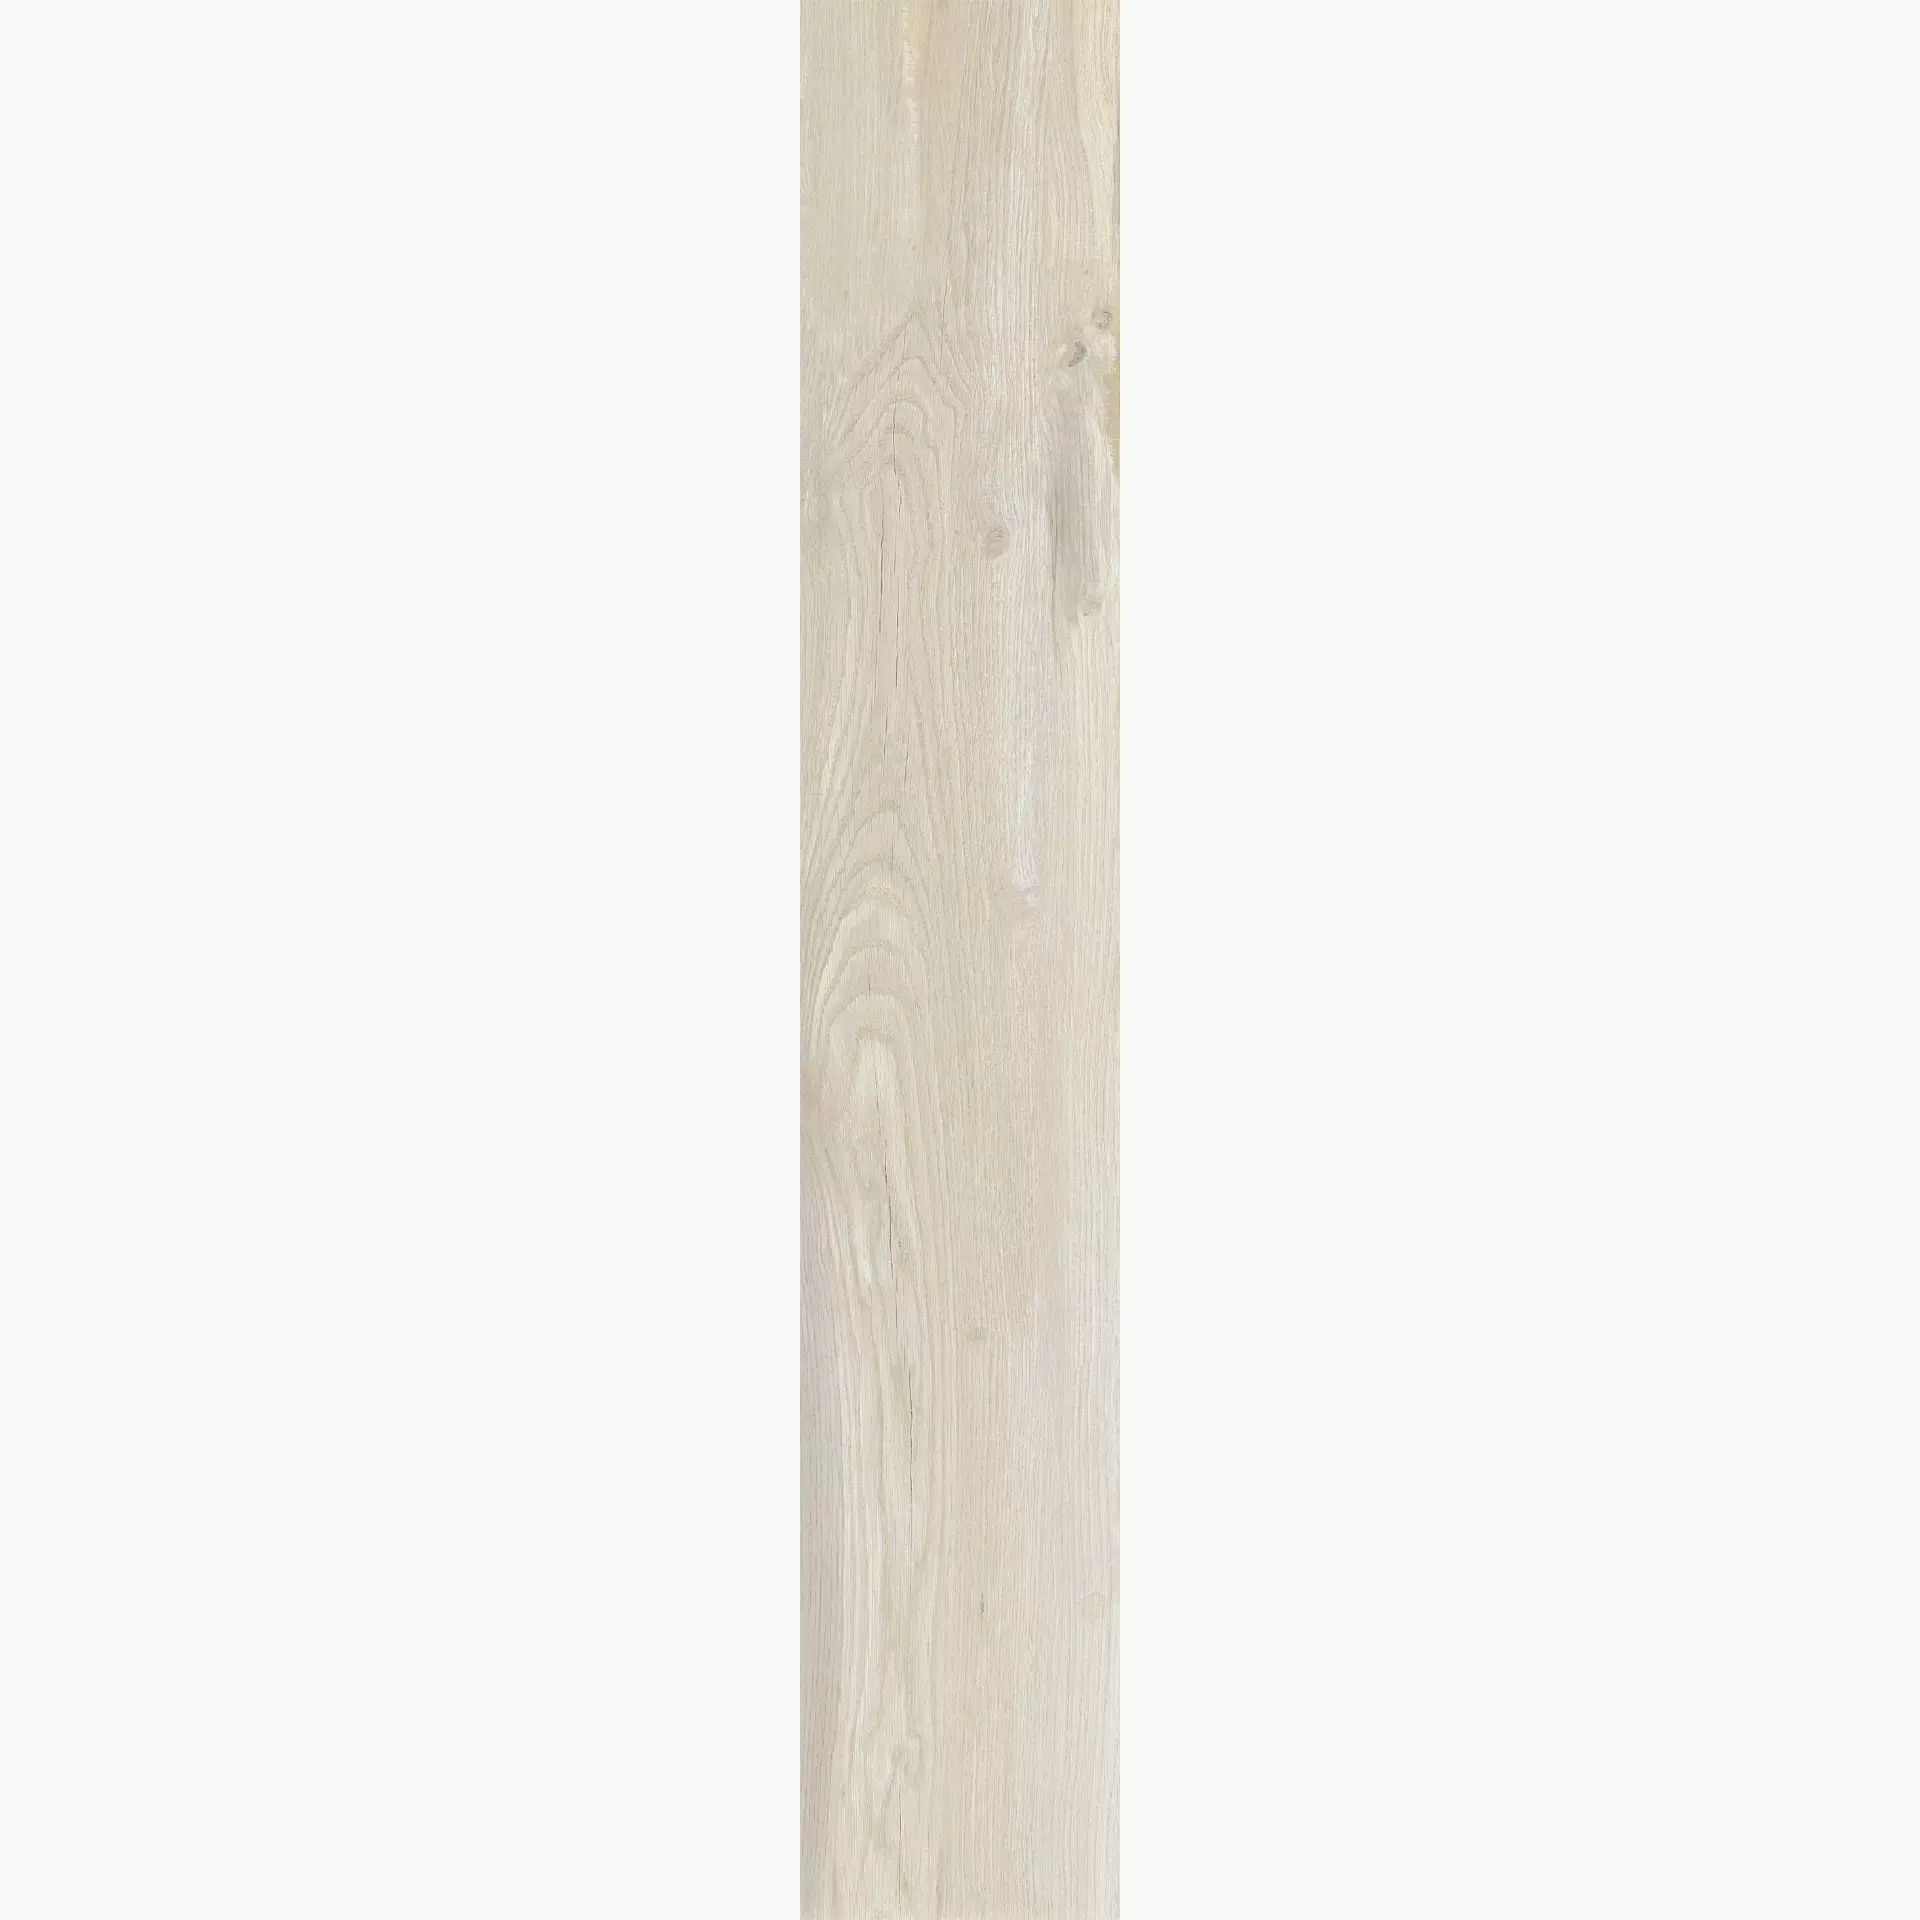 Florim Hi-Wood Of Cerim Almond Naturale – Matt 759961 20x120cm rectified 9mm